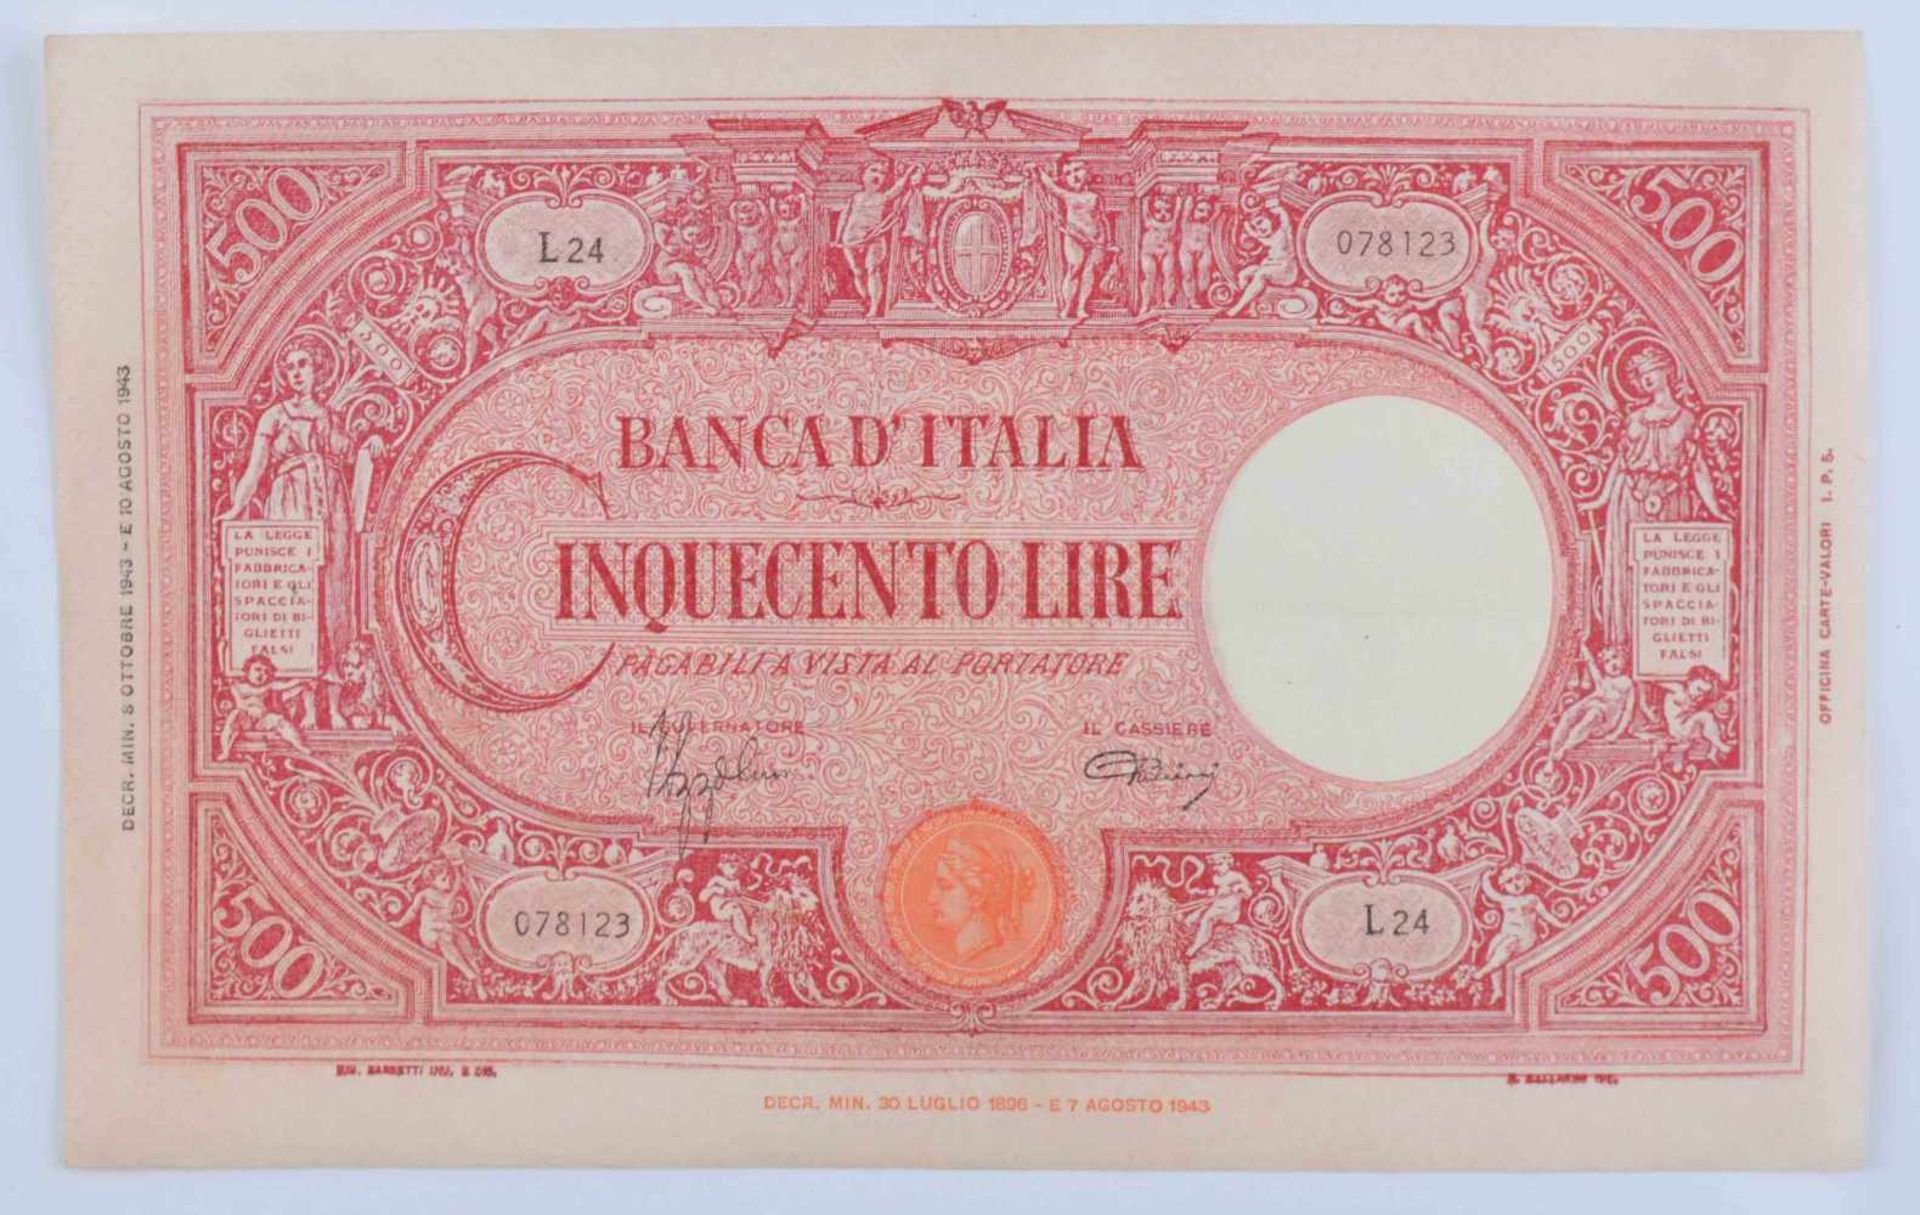 Banknote Italien 500 Lire, 08.11.1943Pick 70 / Grabowski IT 6 b, Erhaltung IIBanknote Italy 500